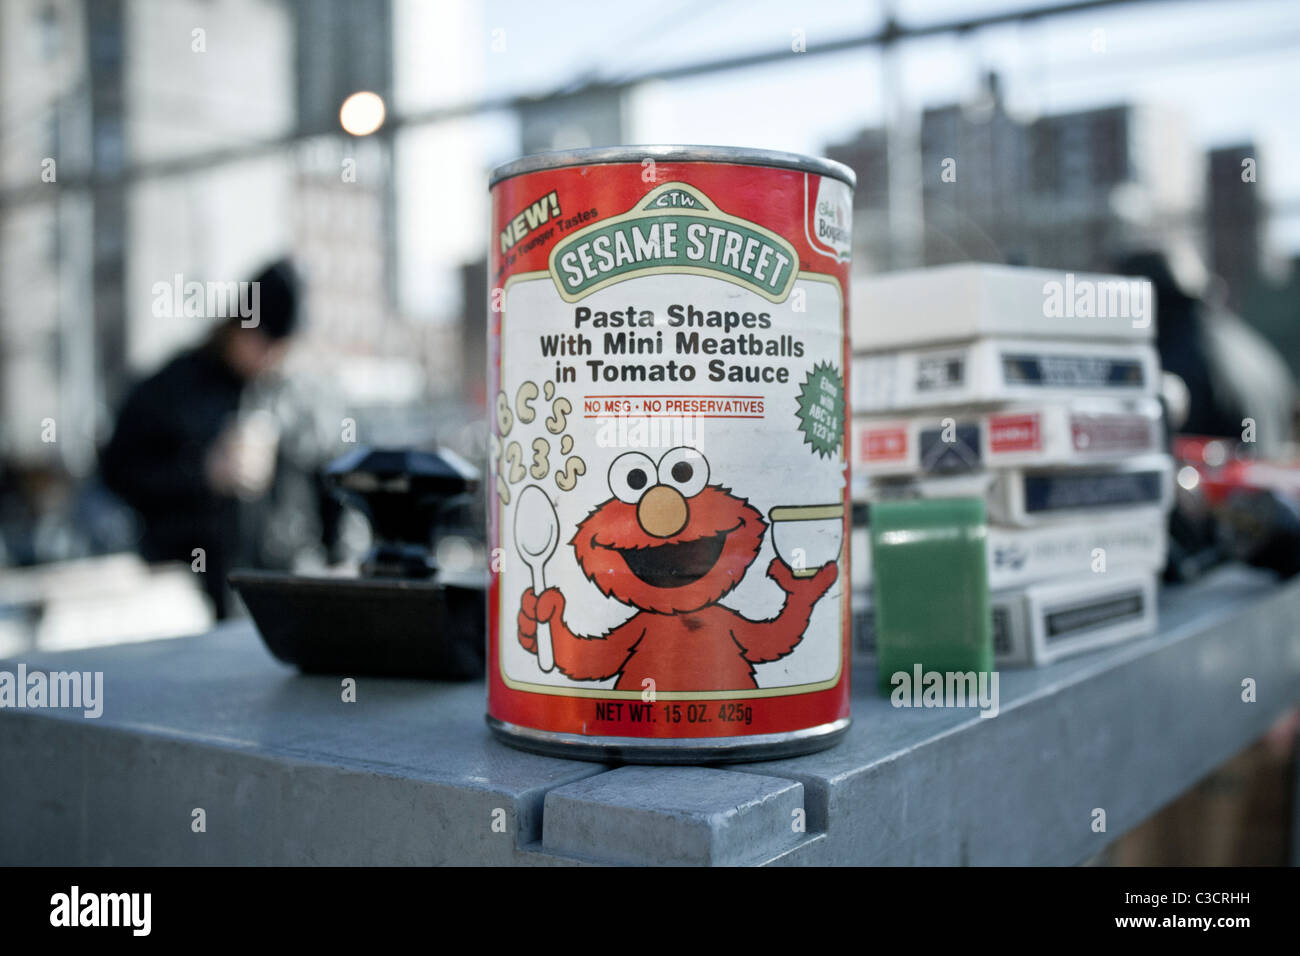 Sesame Street Pasta Shapes at hell's kitchen flea market Stock Photo